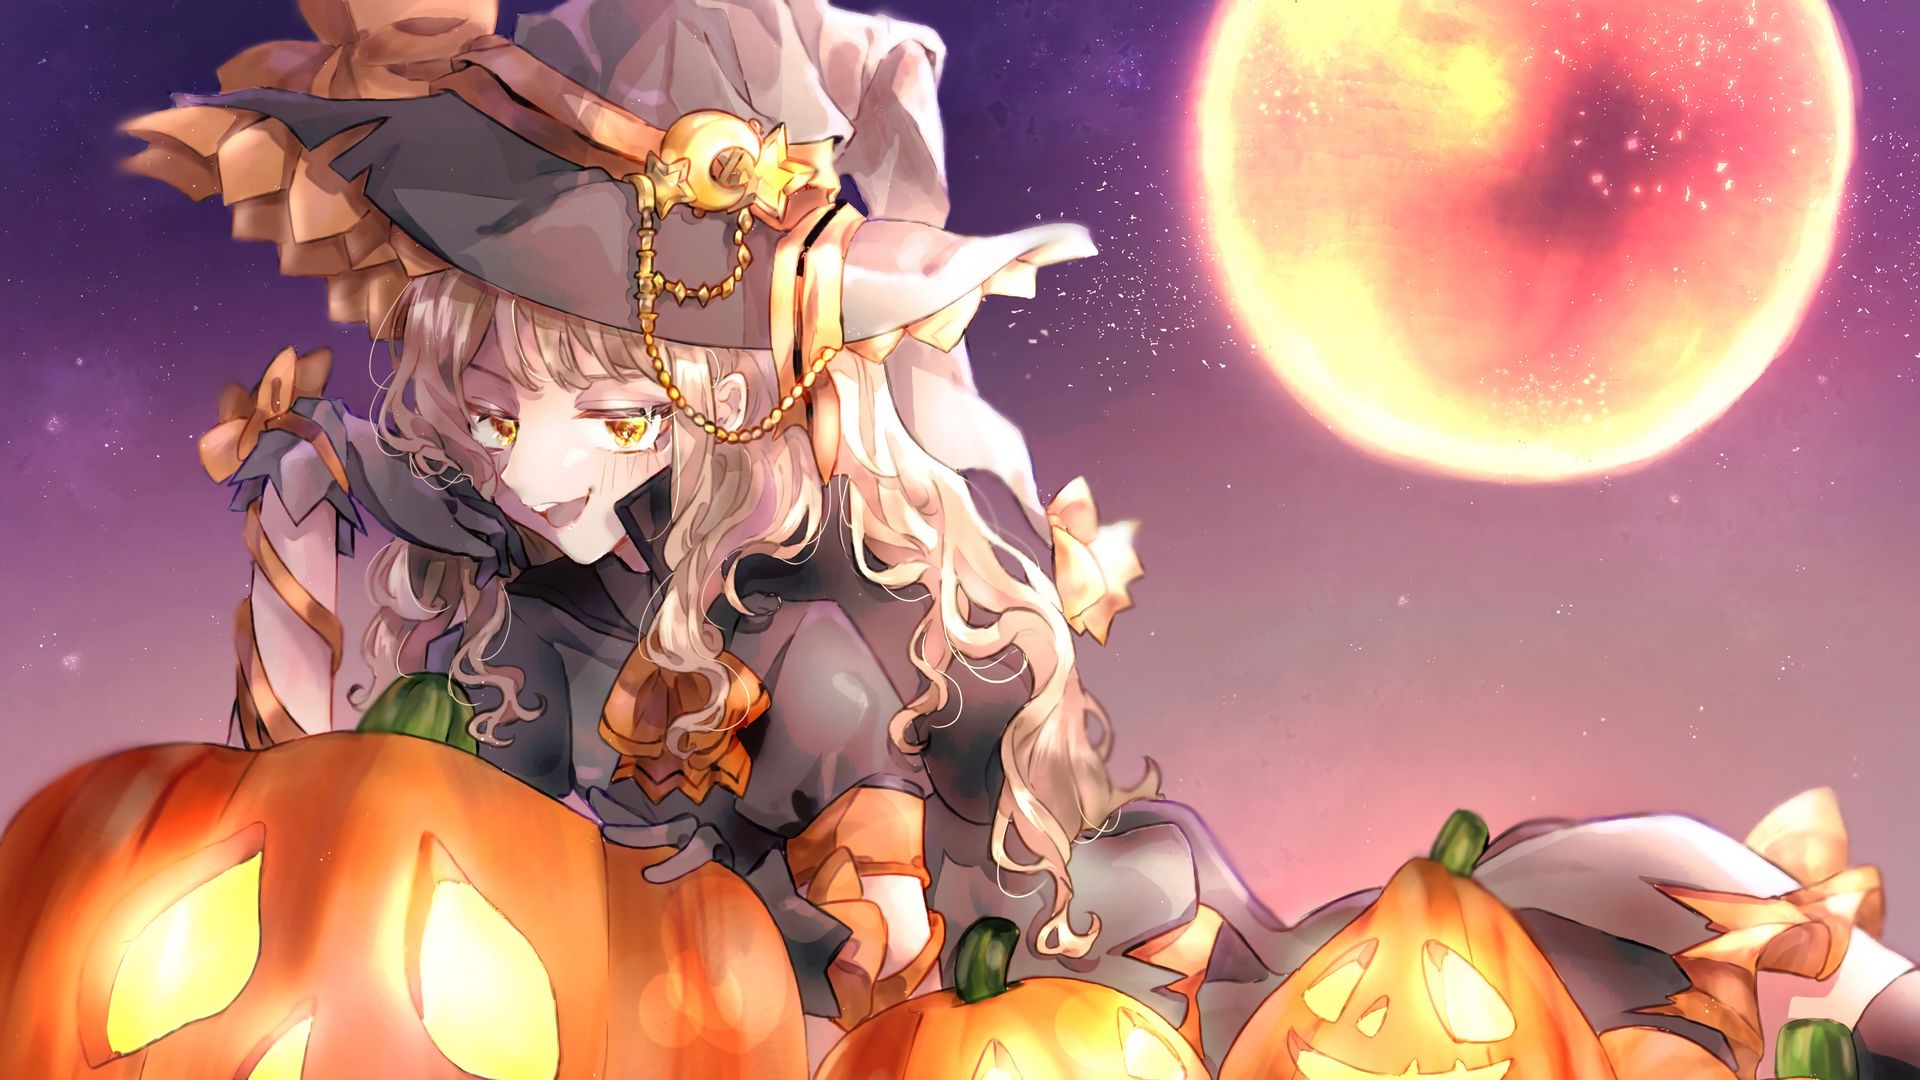 Anime  halloween  Other  Anime Background Wallpapers on Desktop Nexus  Image 1579885